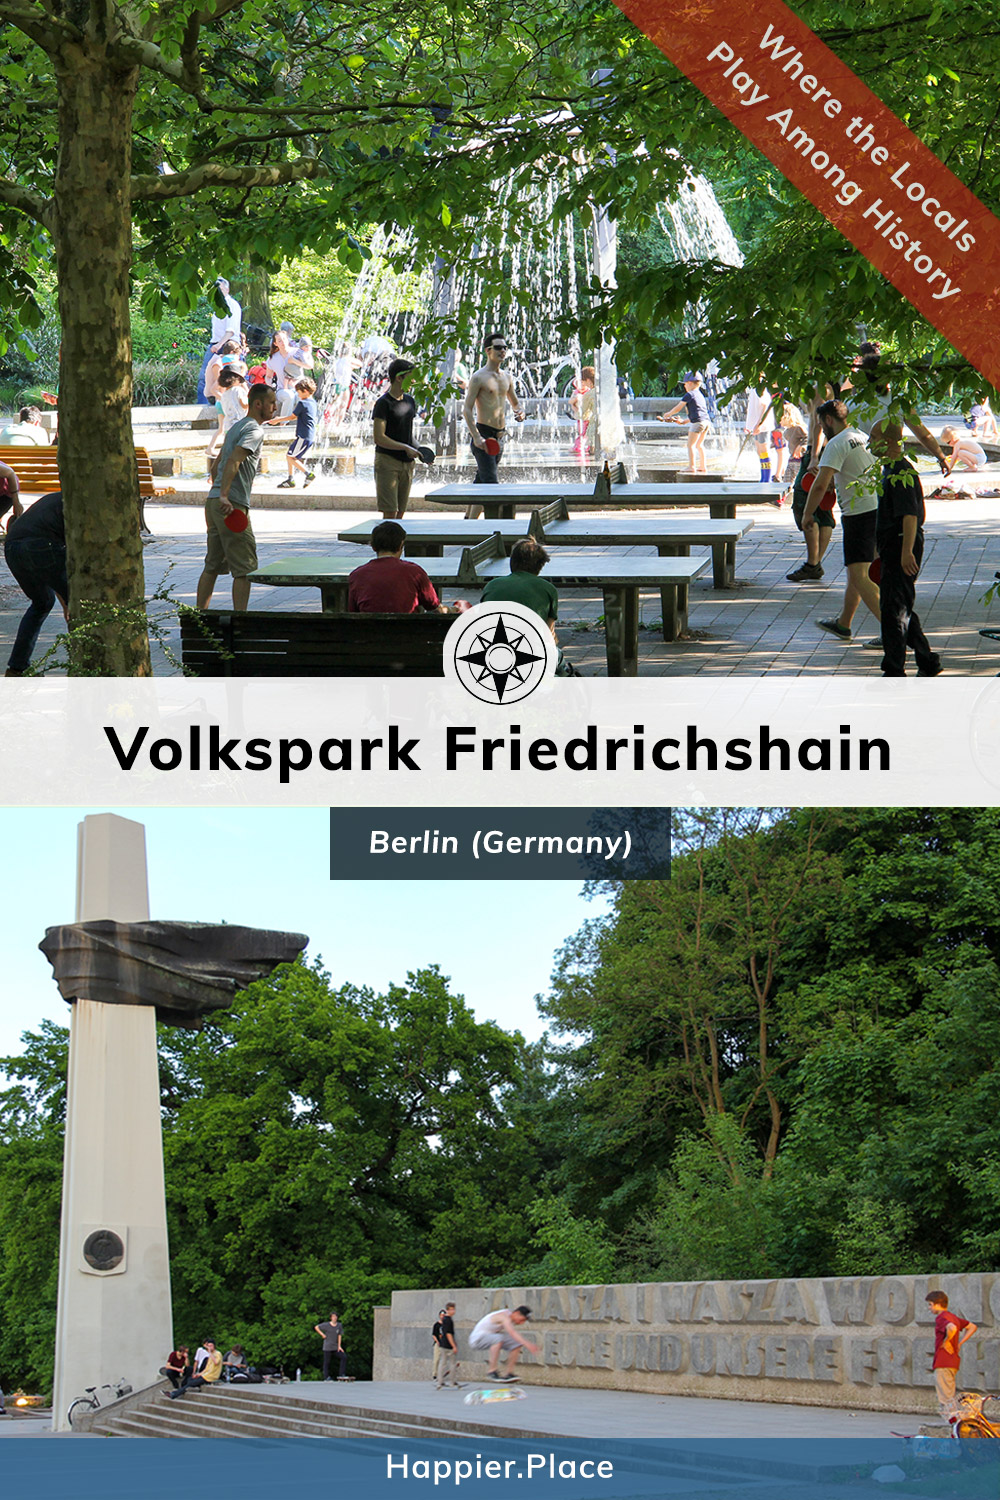 Volkspark Friedrichshain, Berlin, Germany - where locals play among history - ping pong, table tennis, skateboard, polish anti-fascist german memorial